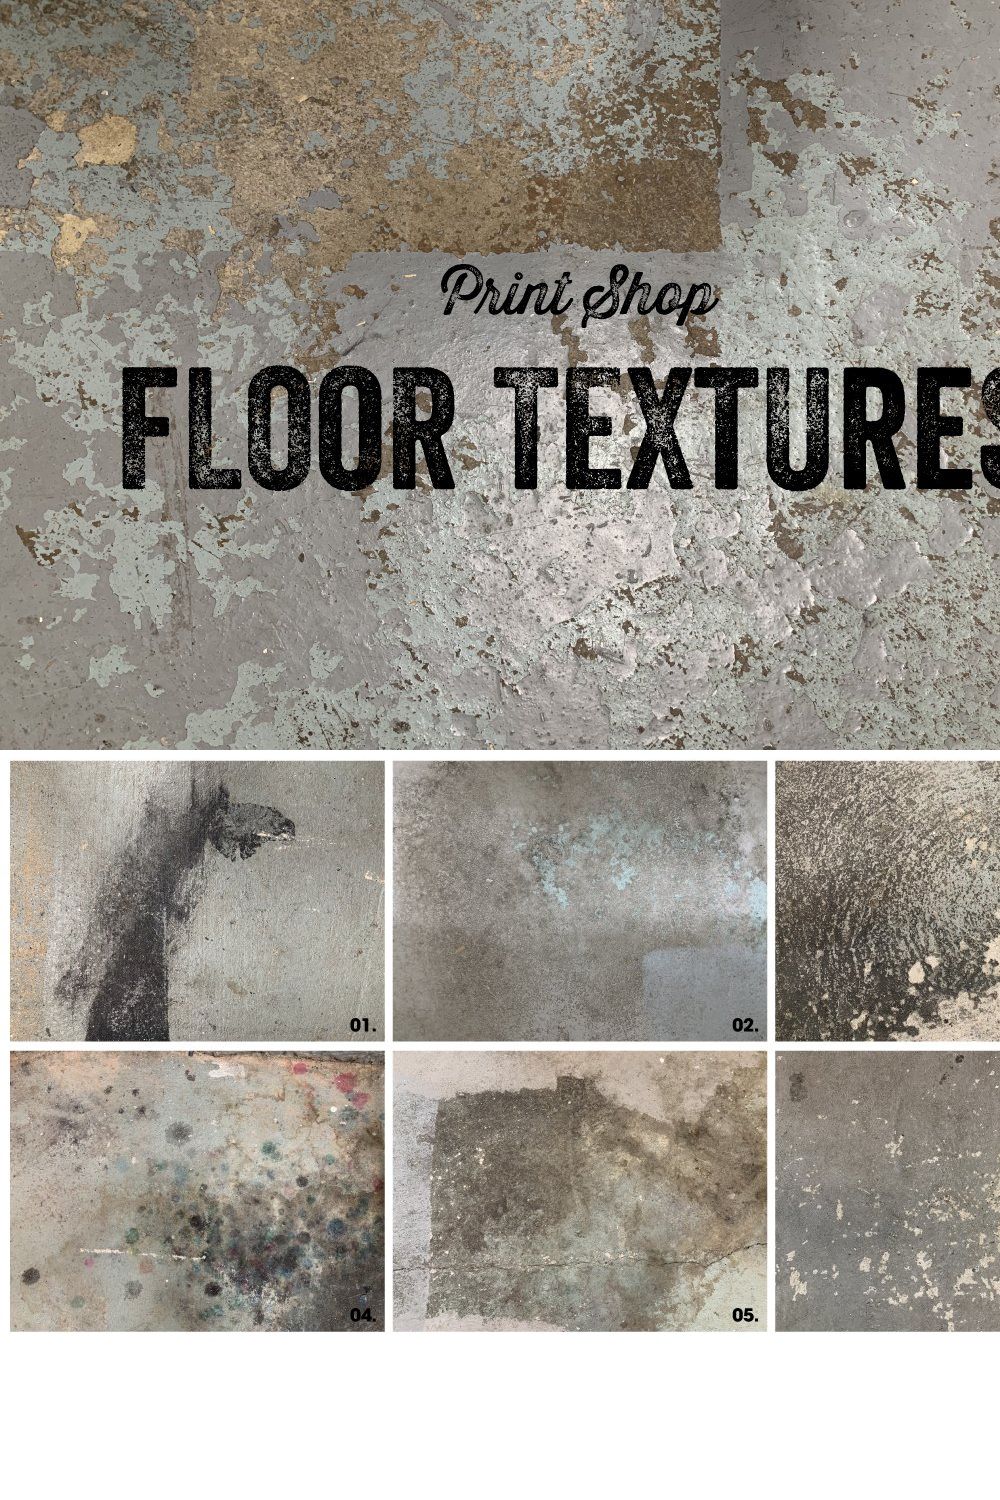 Print Shop Floor Textures - 30 Items pinterest preview image.